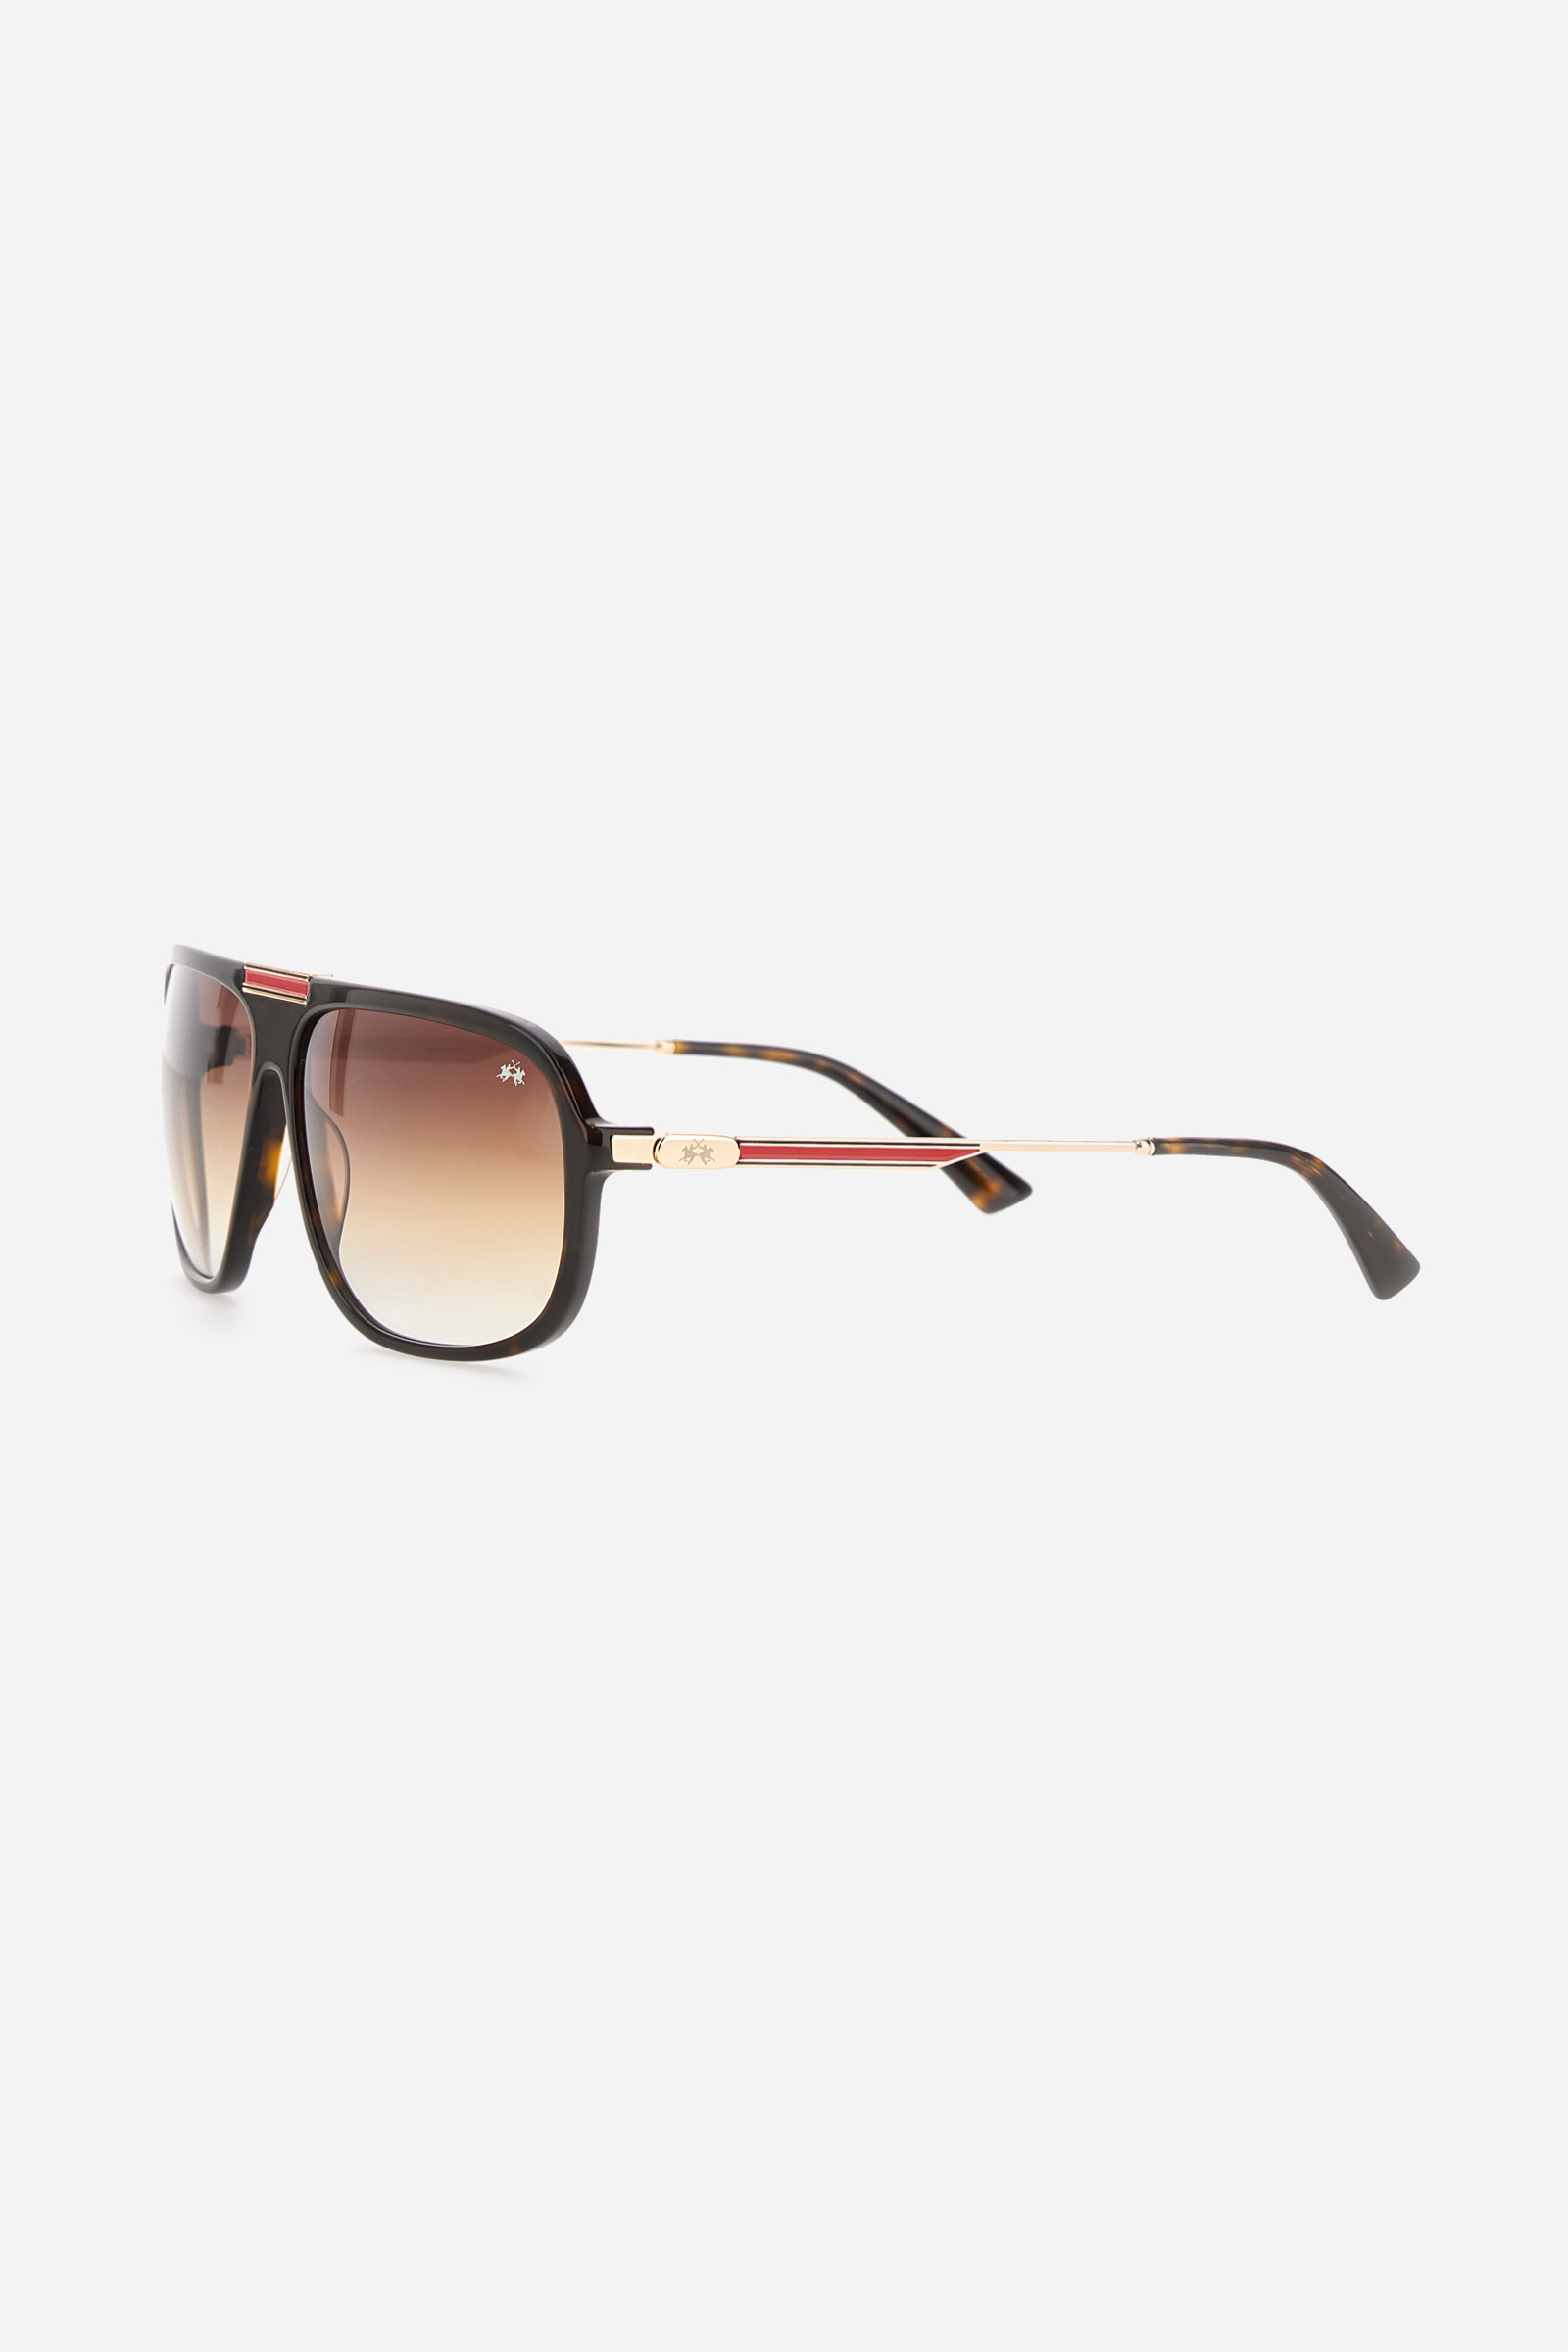 Sunglasses aviator style Avana Shop La Online Martina Dark 